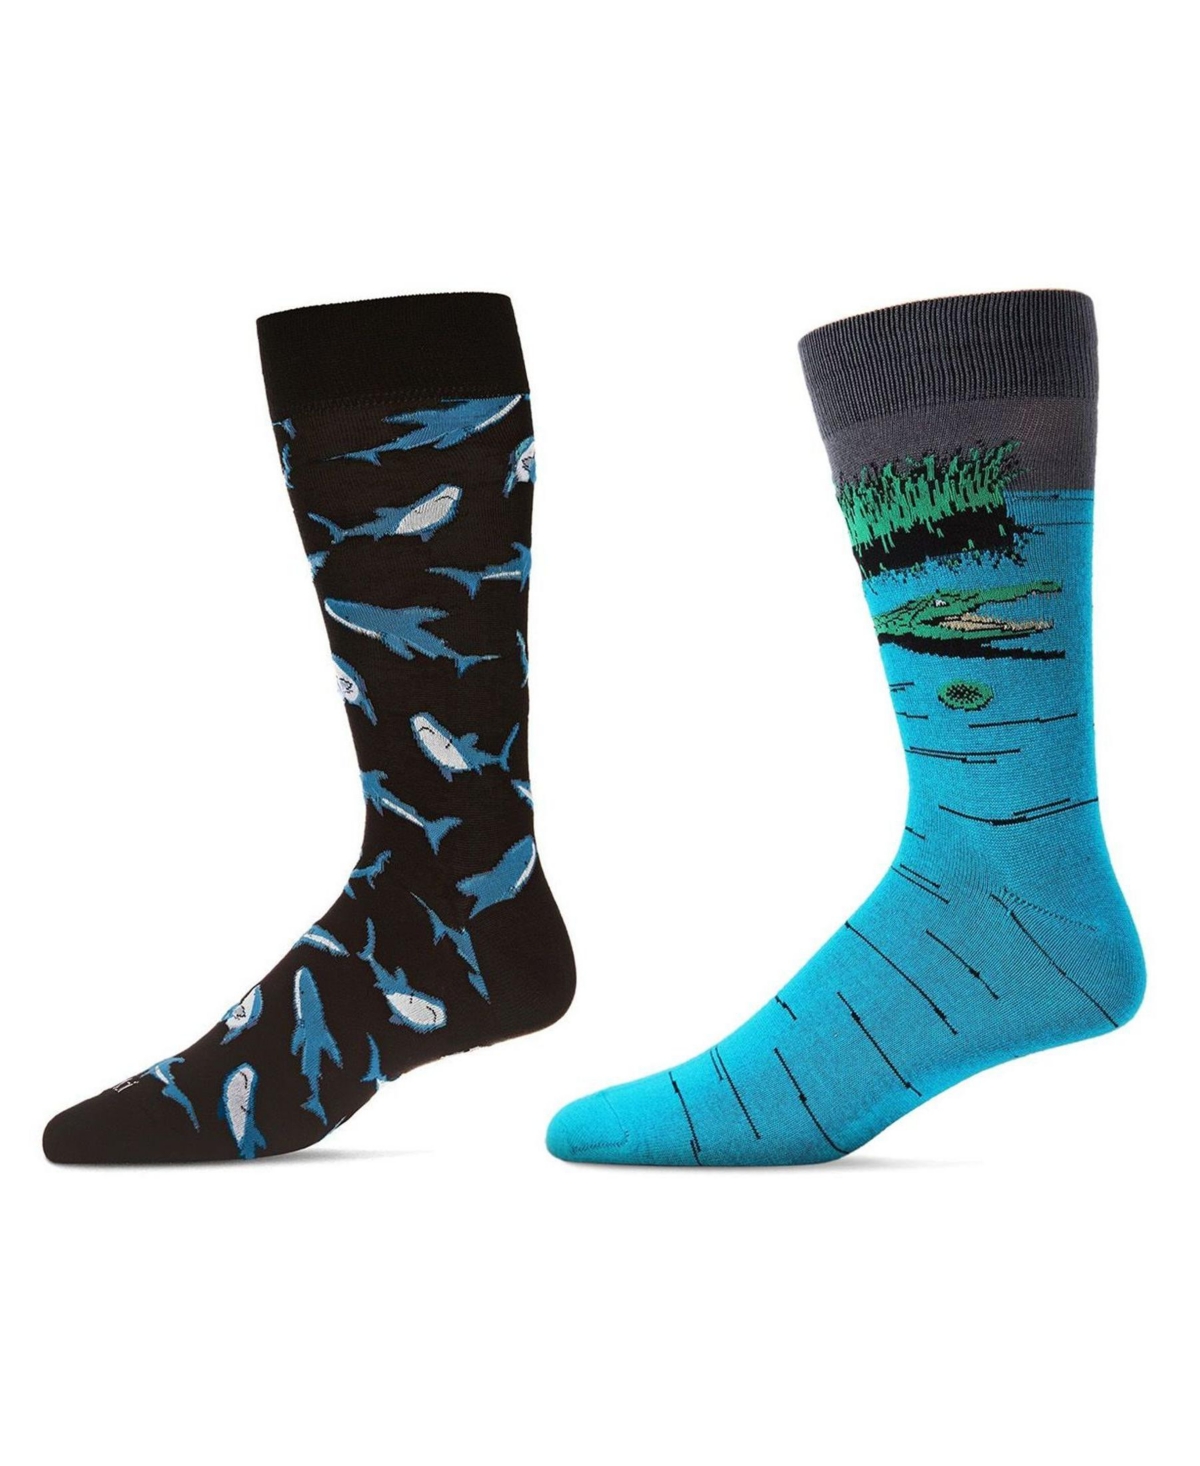 Men's Crew Season Assortment Socks, Pair of 2 - Black-Blue